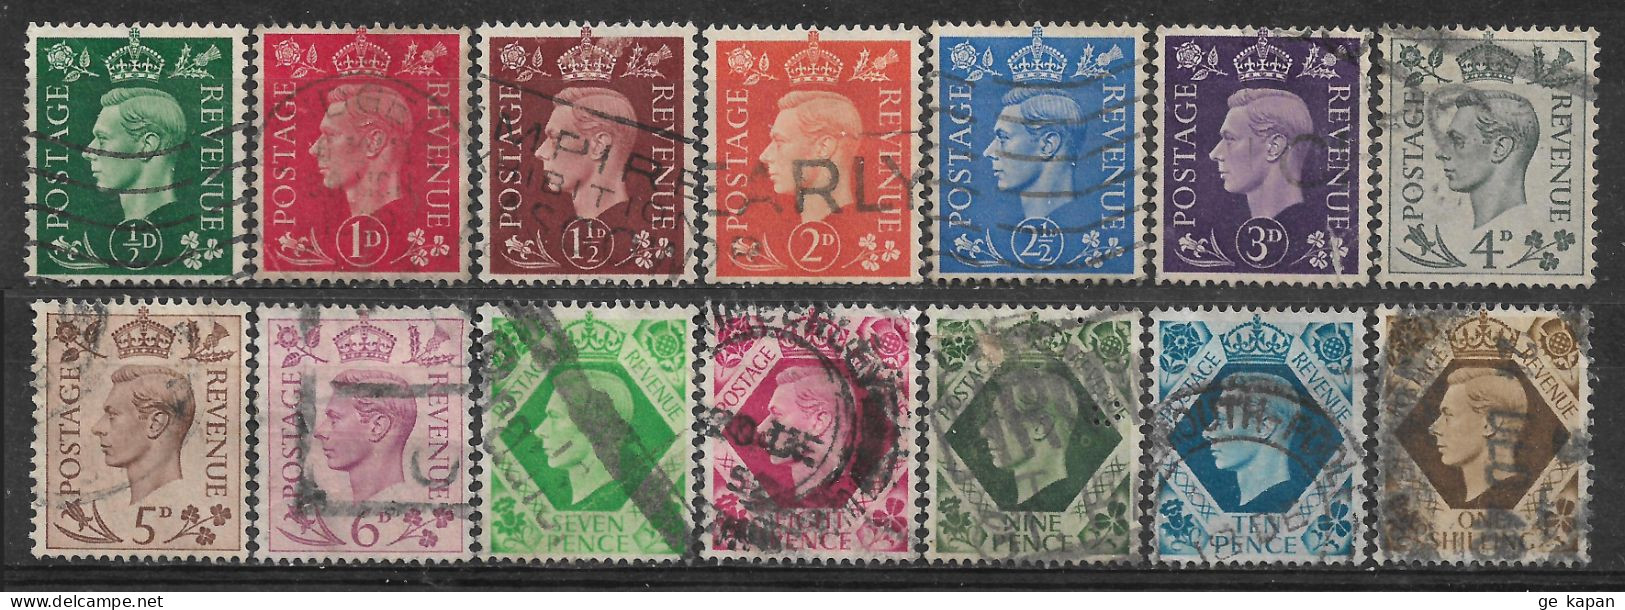 1937-1939 GREAT BRITAIN Complete Set Of 14 Used Stamps (Scott # 235-248) CV $9.10 - Gebraucht